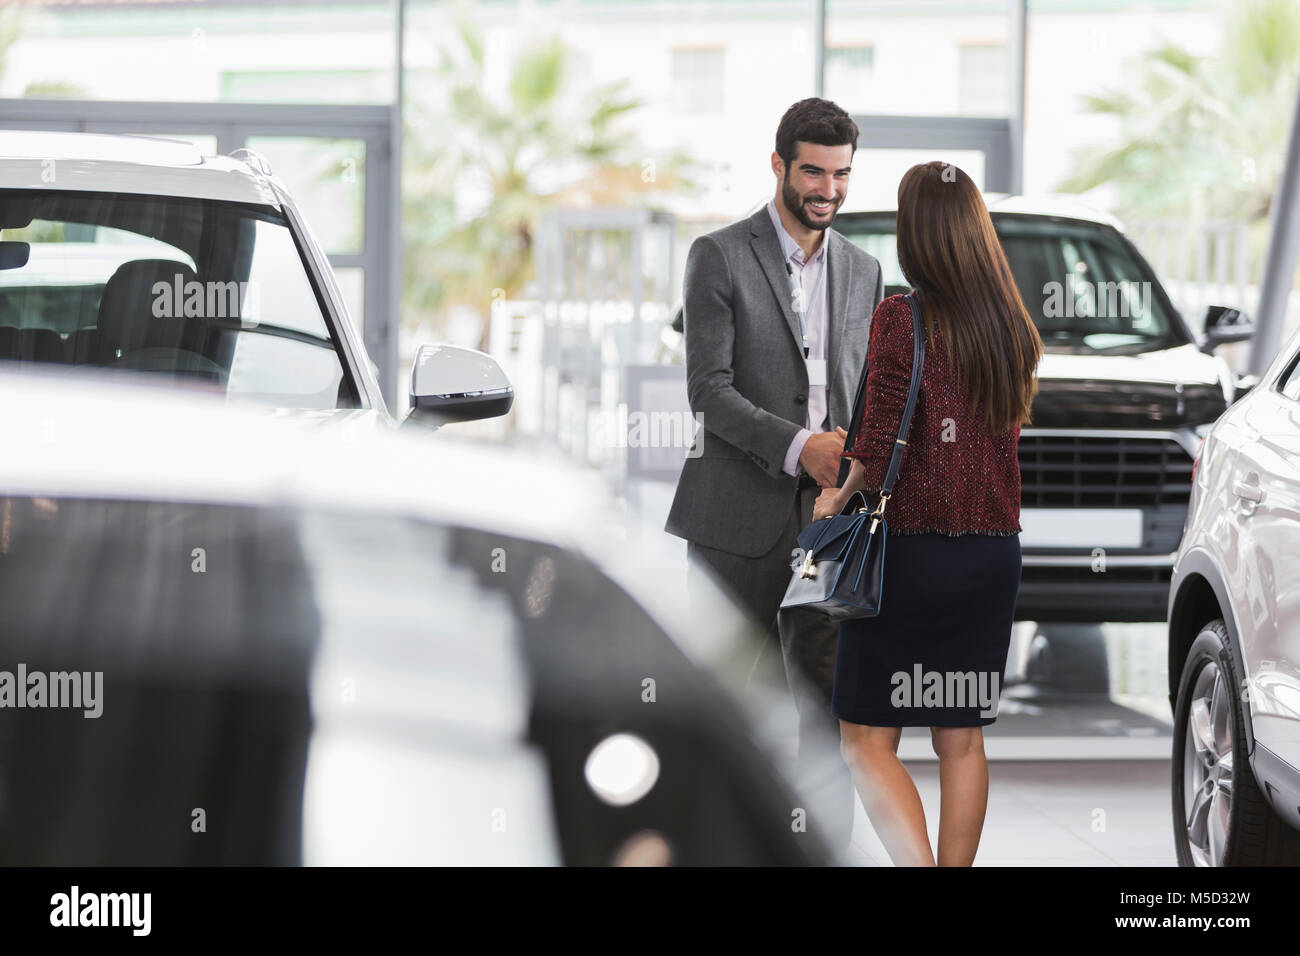 Car salesman greeting, shaking hands with female customer in car dealership showroom Stock Photo